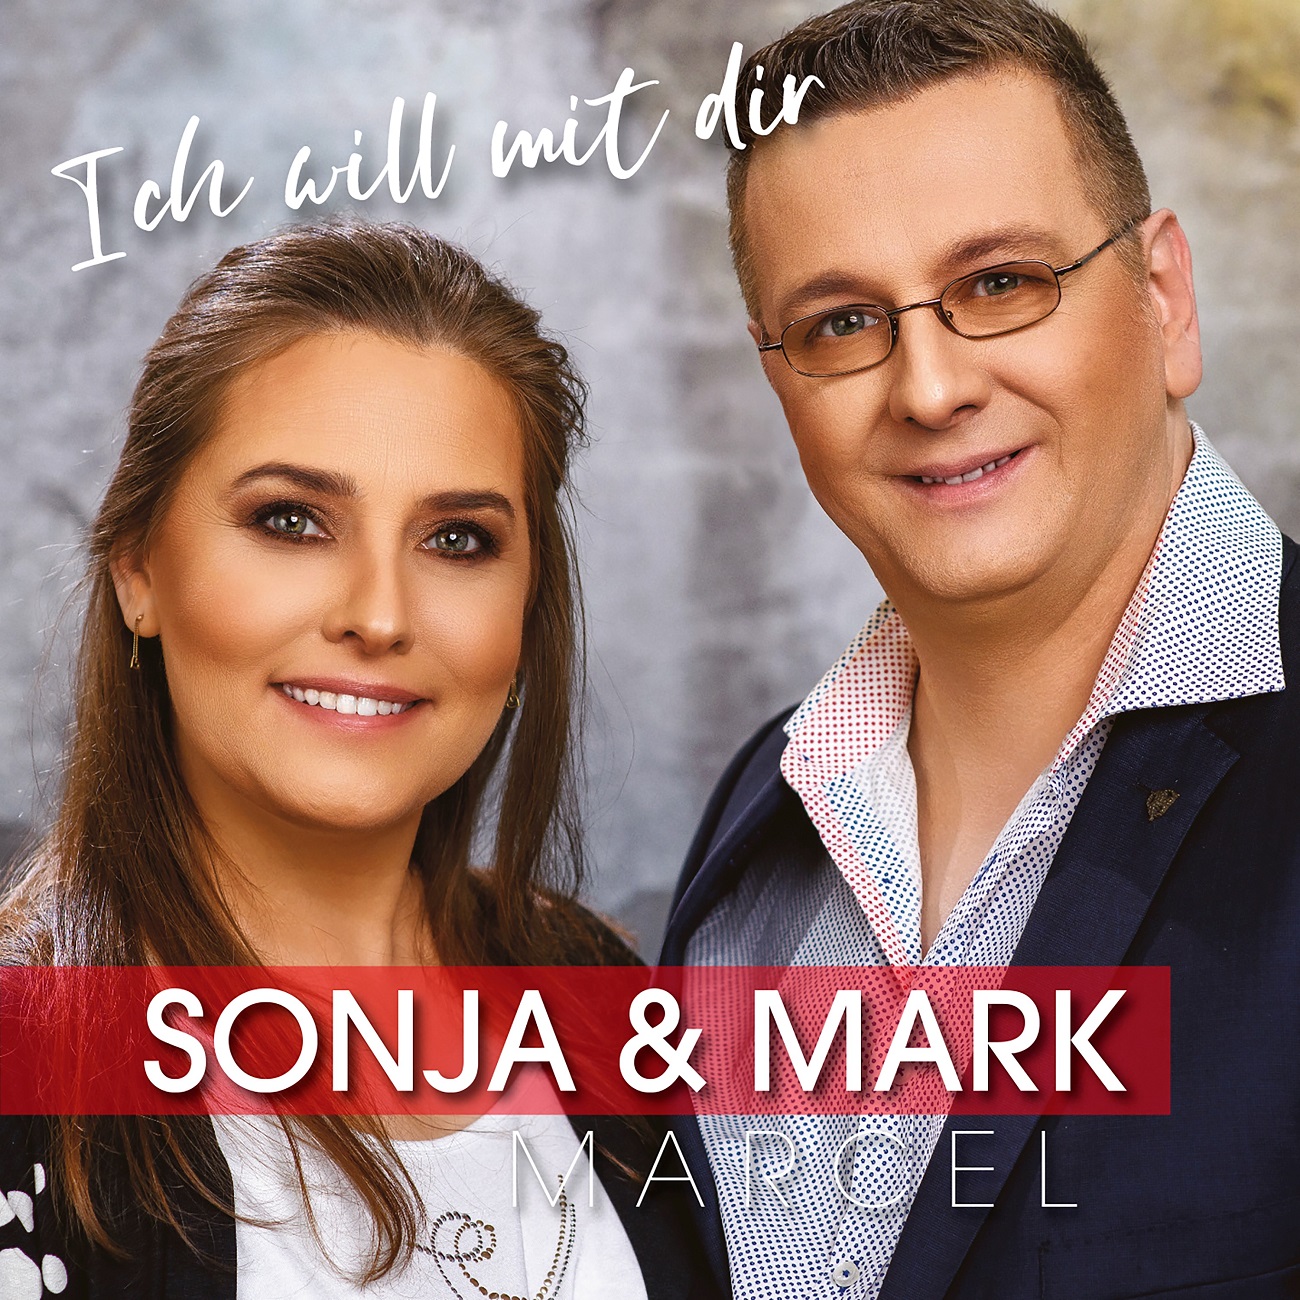 Sonja  Mark Marcel - Ich will mit Dir - Cover 2 MB.jpg